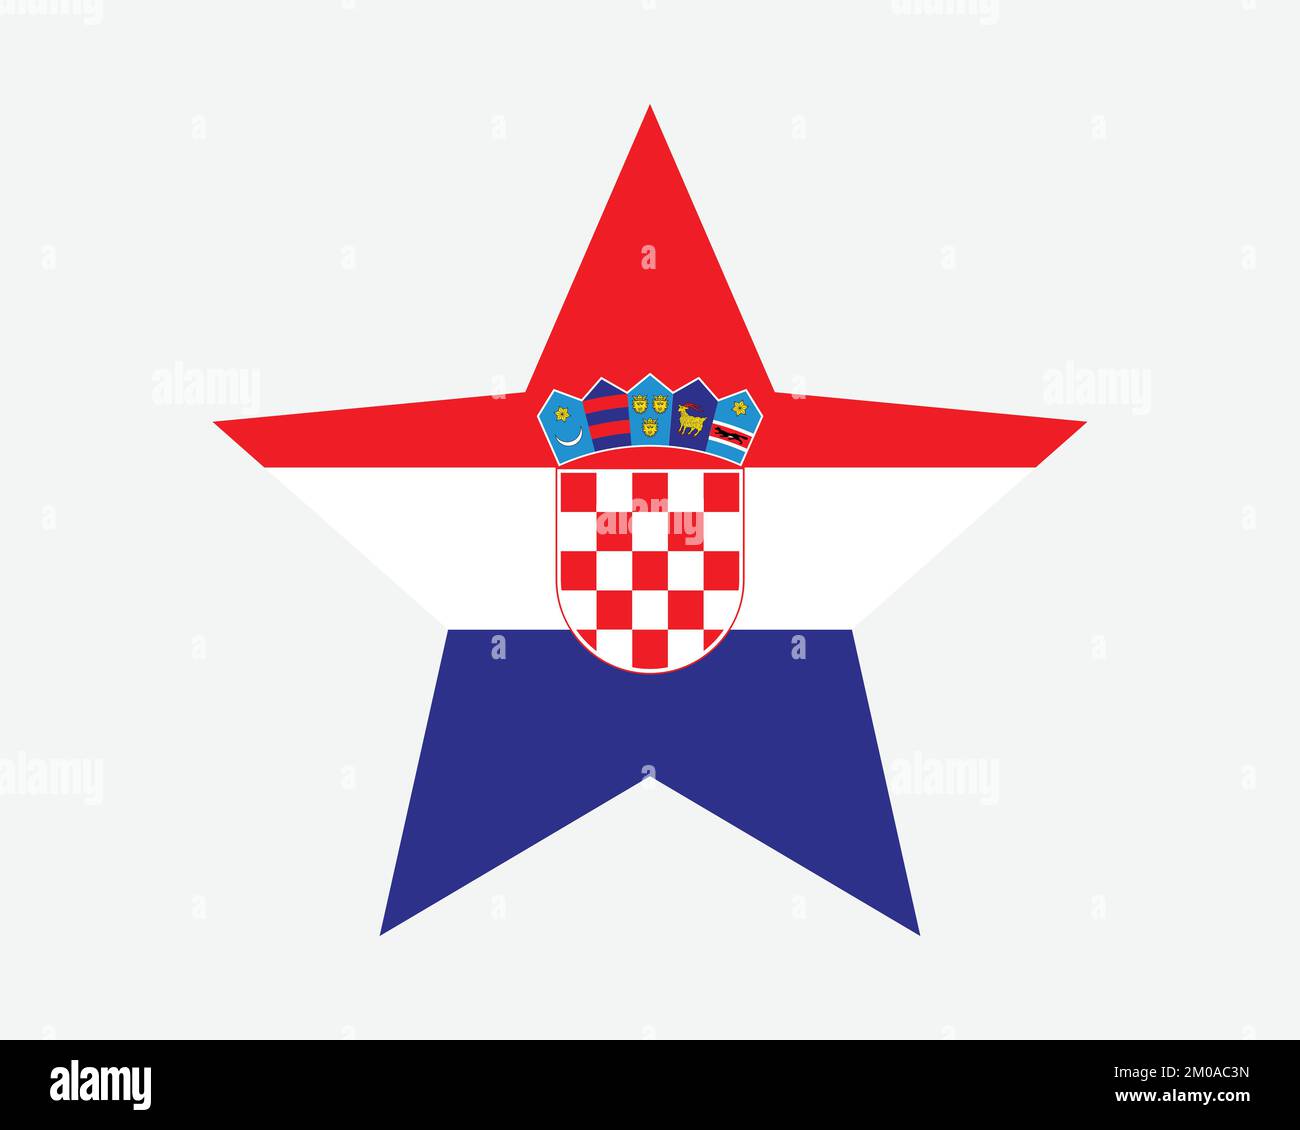 Croatia Star Flag. Croatian Star Shape Flag. Country National Banner Icon Symbol Vector 2D Flat Artwork Graphic Illustration Stock Vector